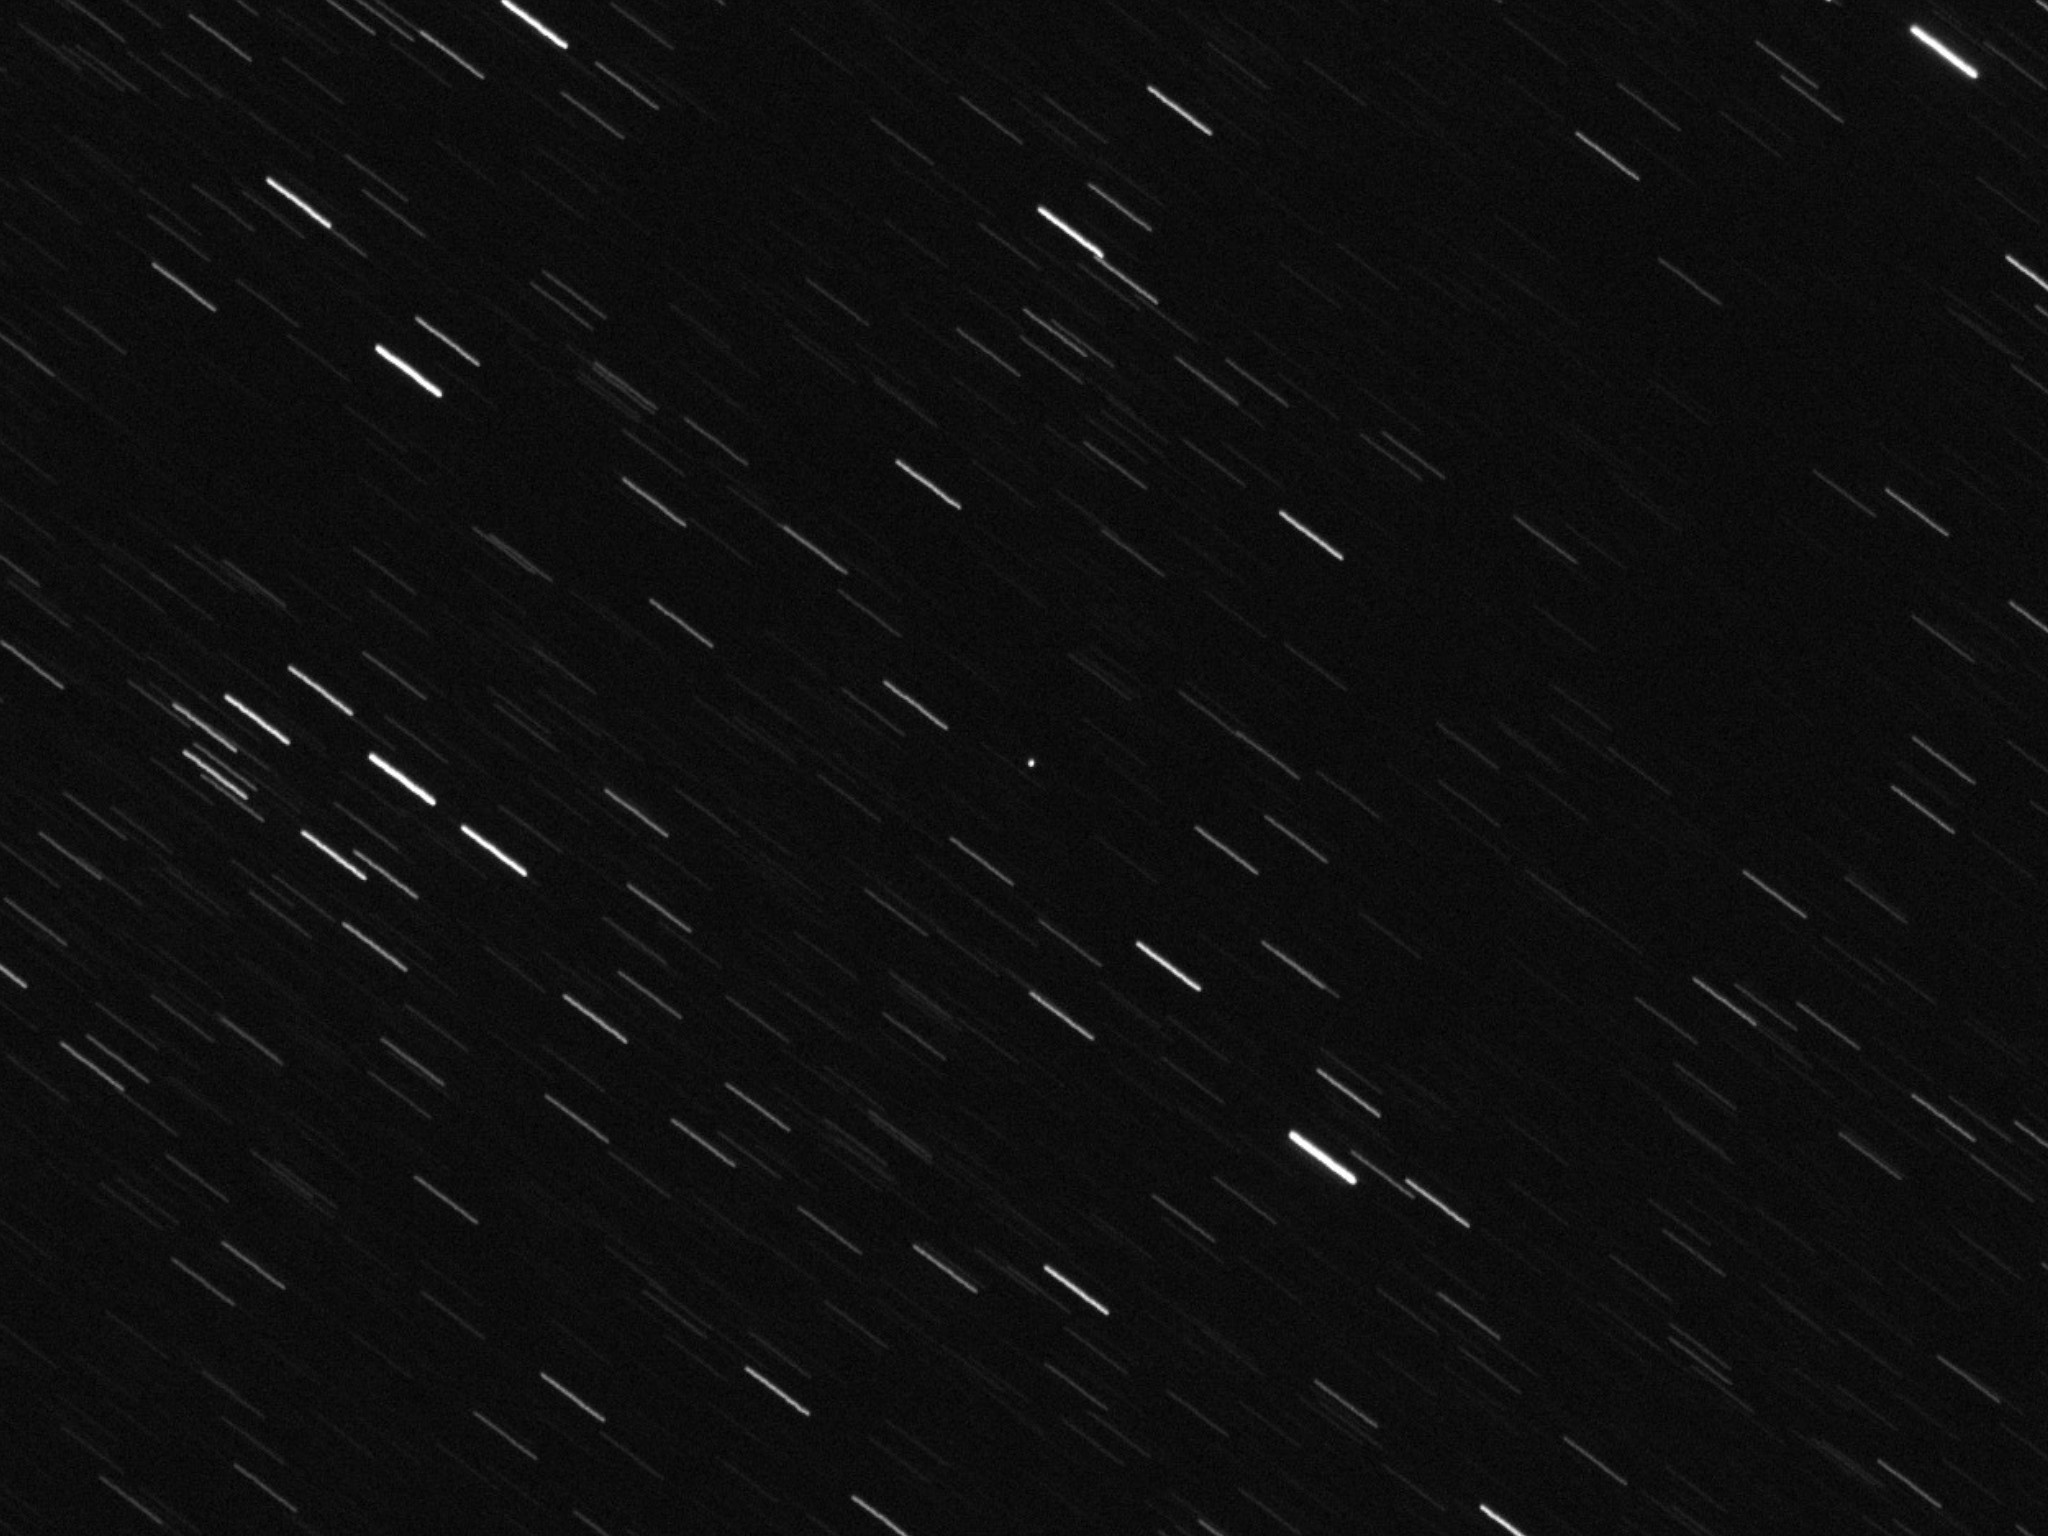 COSMOS 2541 (2019-065A) in Molniya orbit